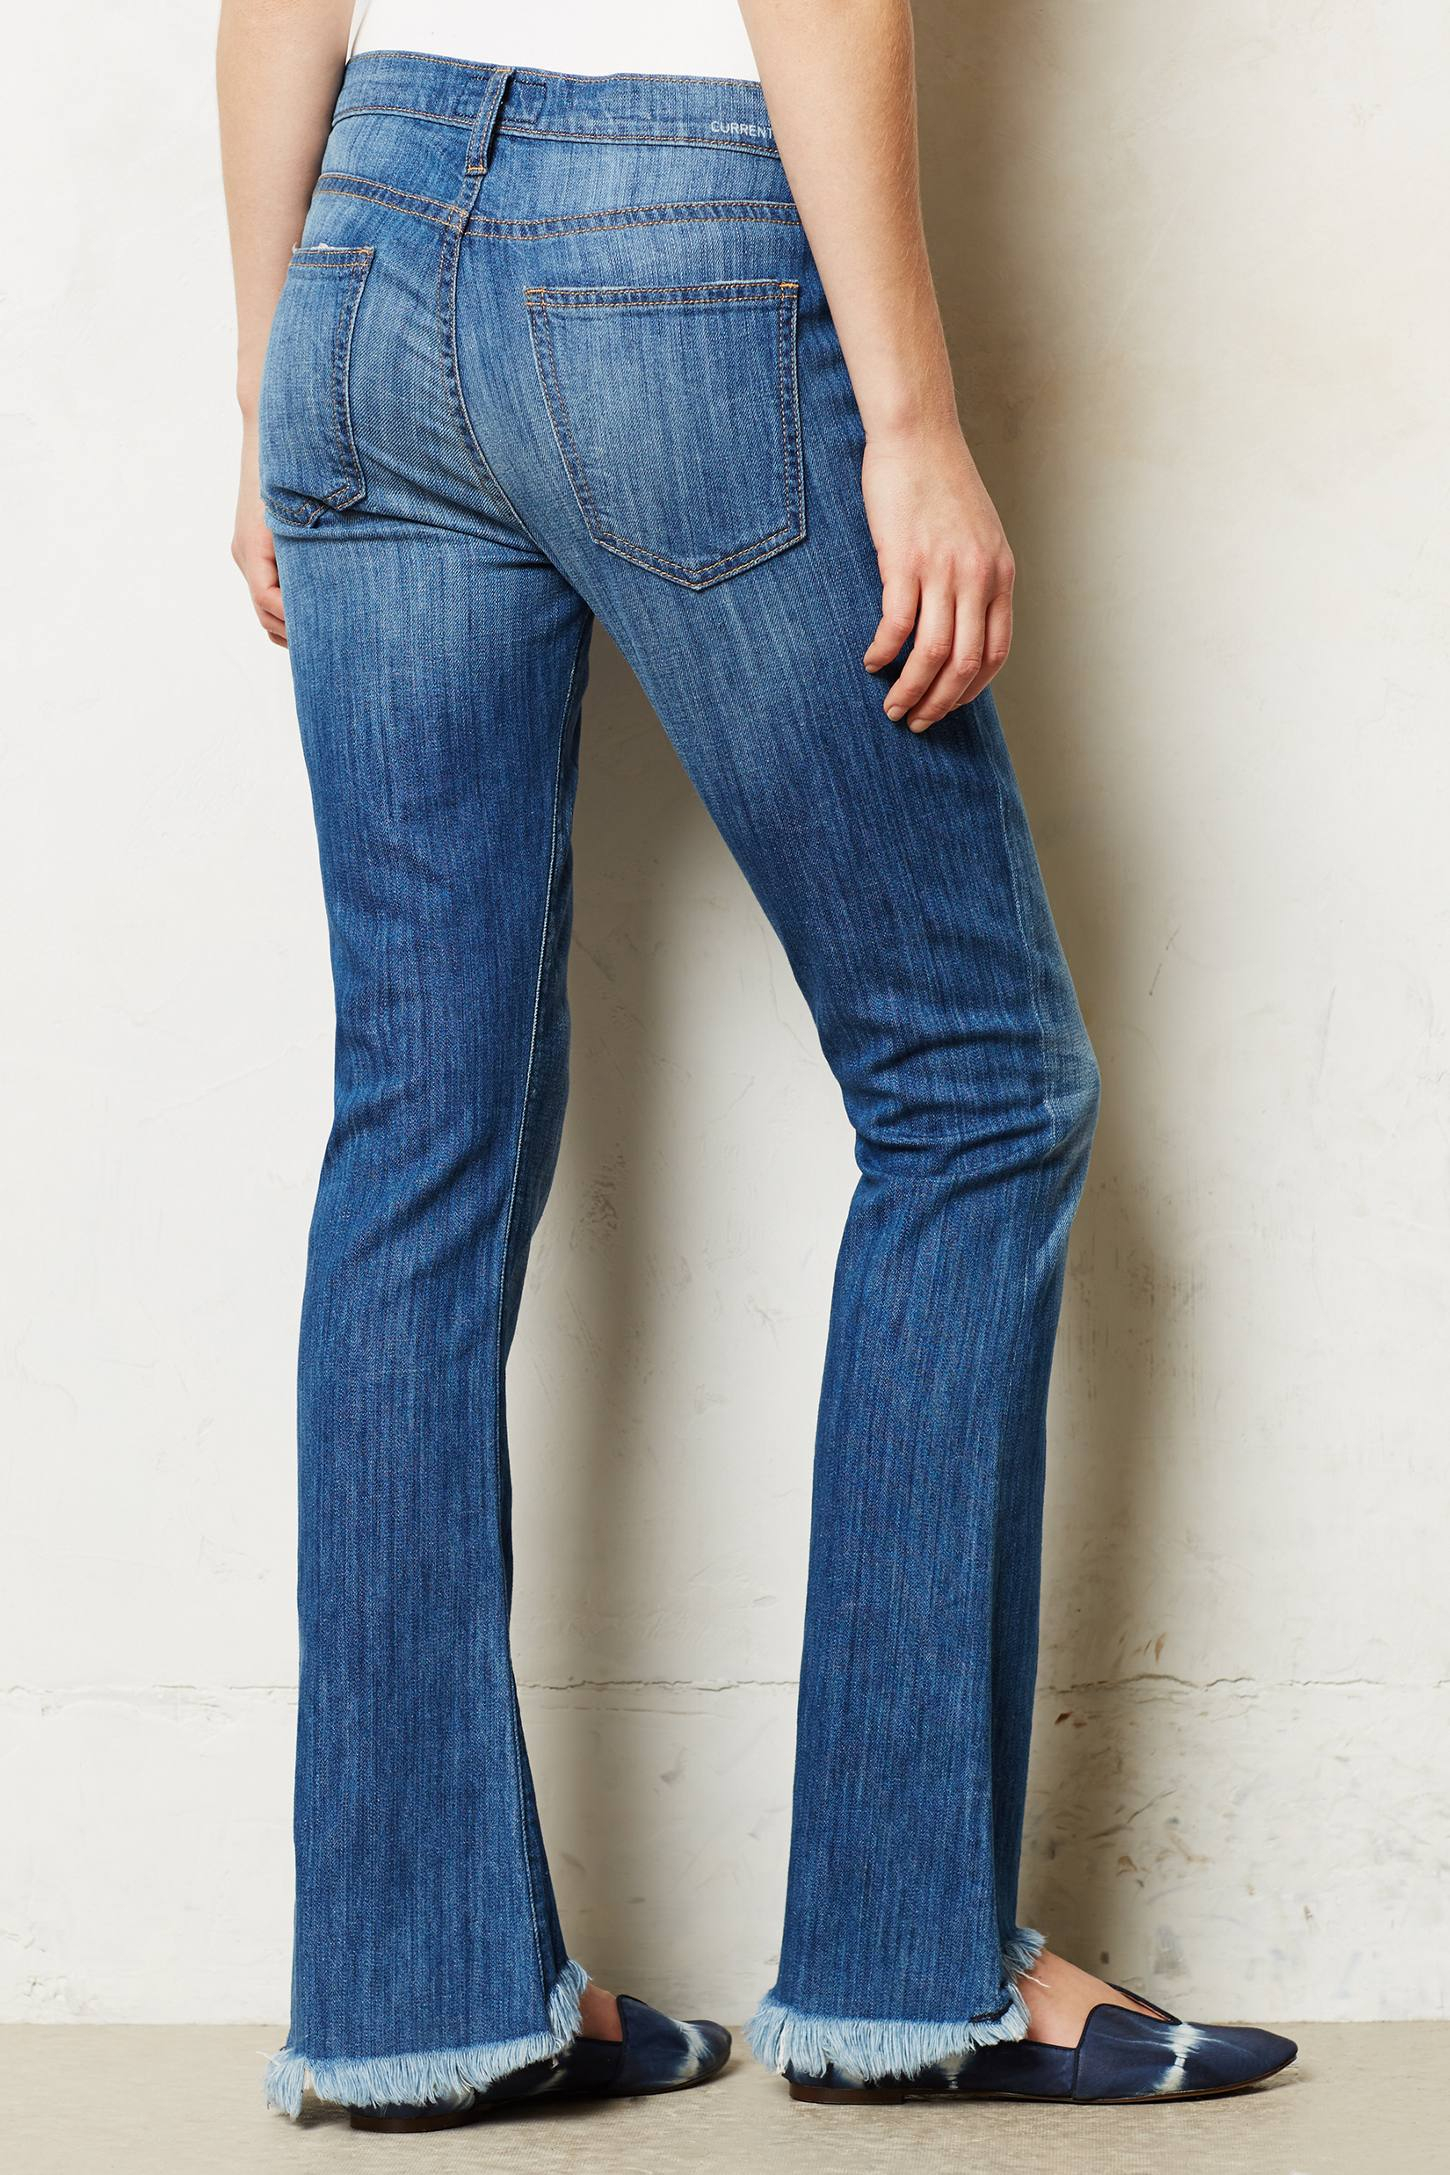 Lyst - Current/elliott Flipflop Jeans in Blue